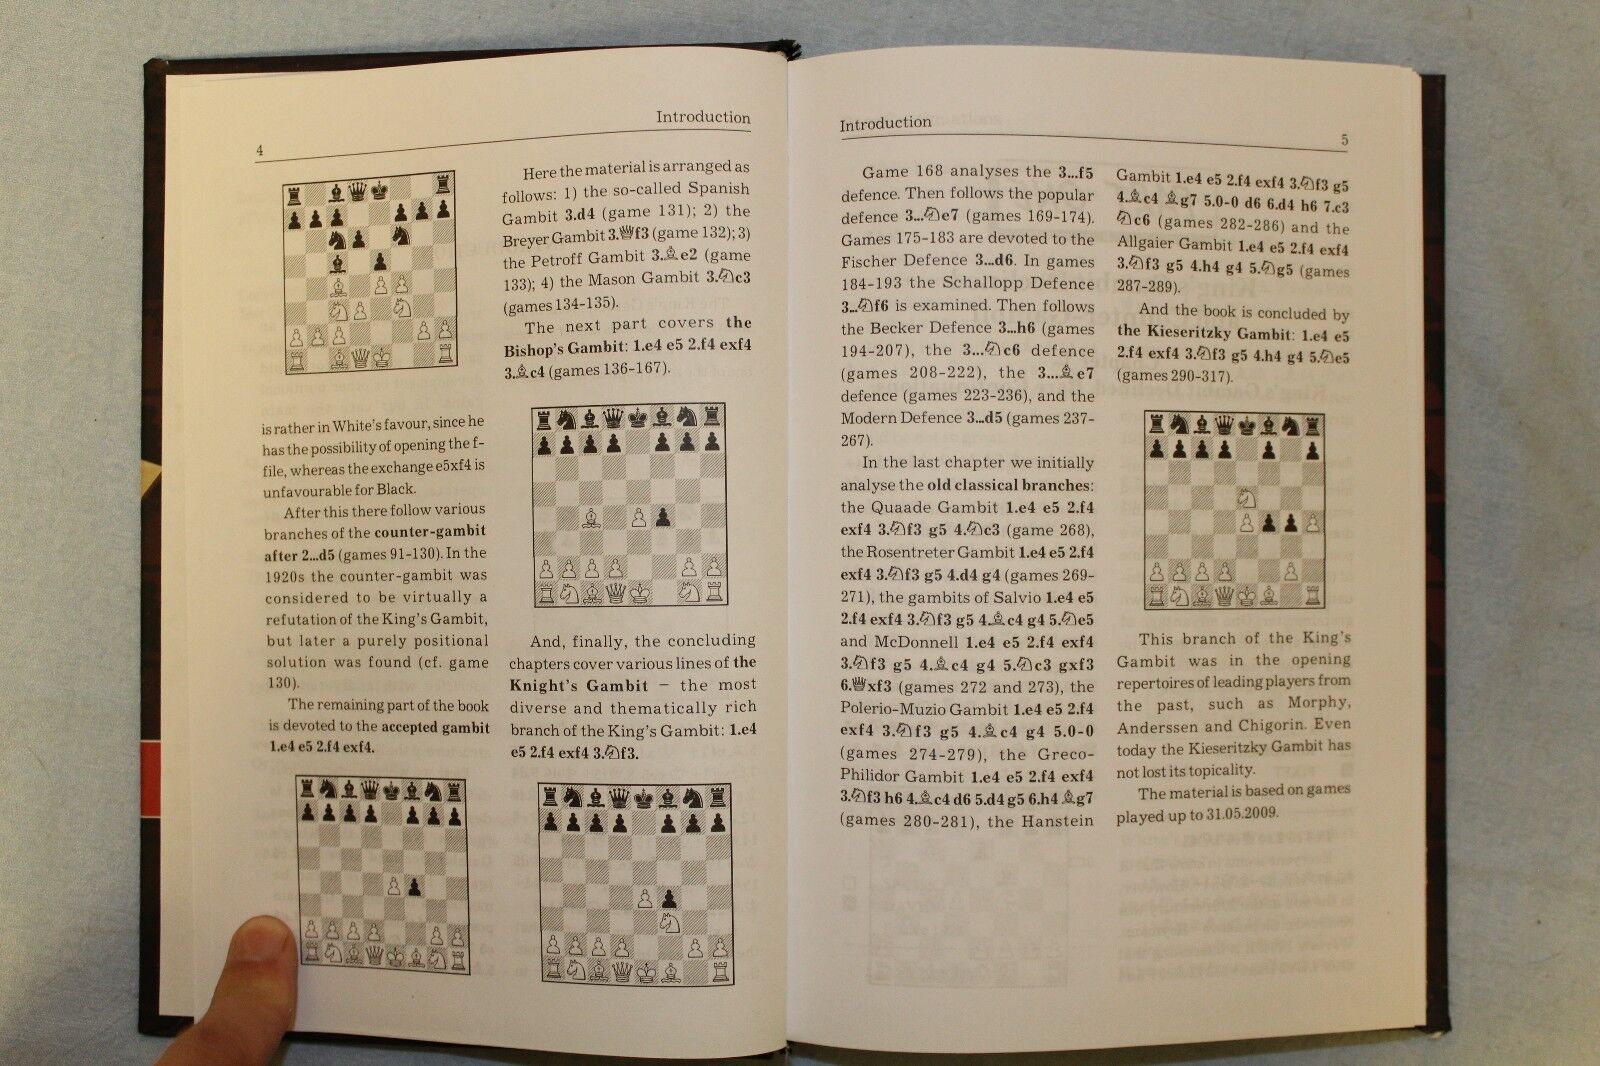 Chess Book: Nikolai Kalinichenko. Kings gambit. 2009